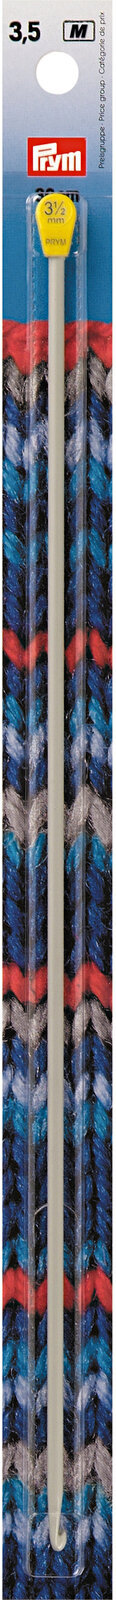 Cârlige metalice
 PRYM Cârlige metalice
 30 cm 4 mm